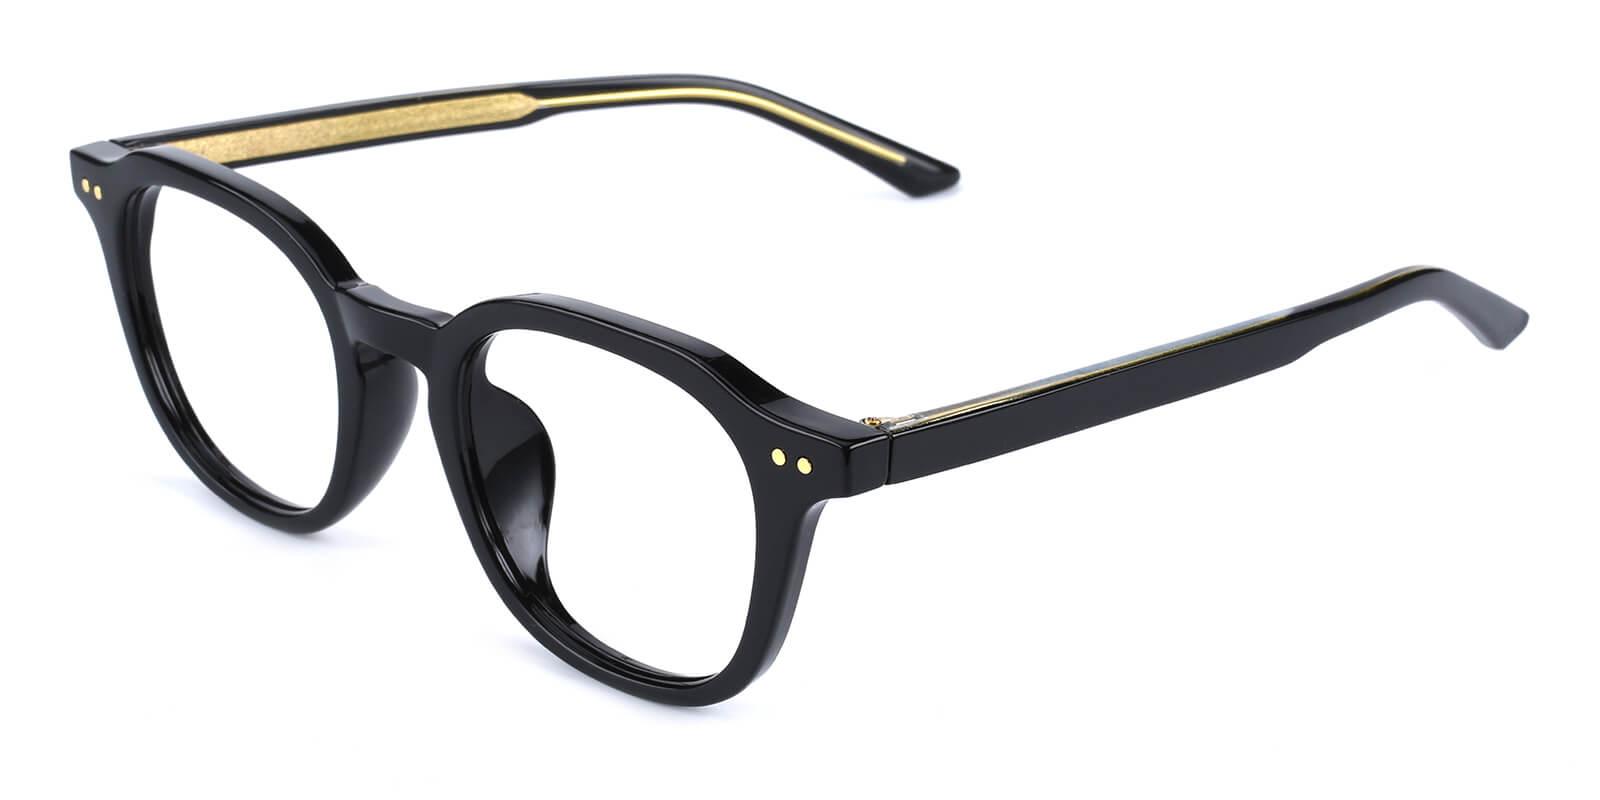 Dapper-Black-Geometric-Acetate-Eyeglasses-detail